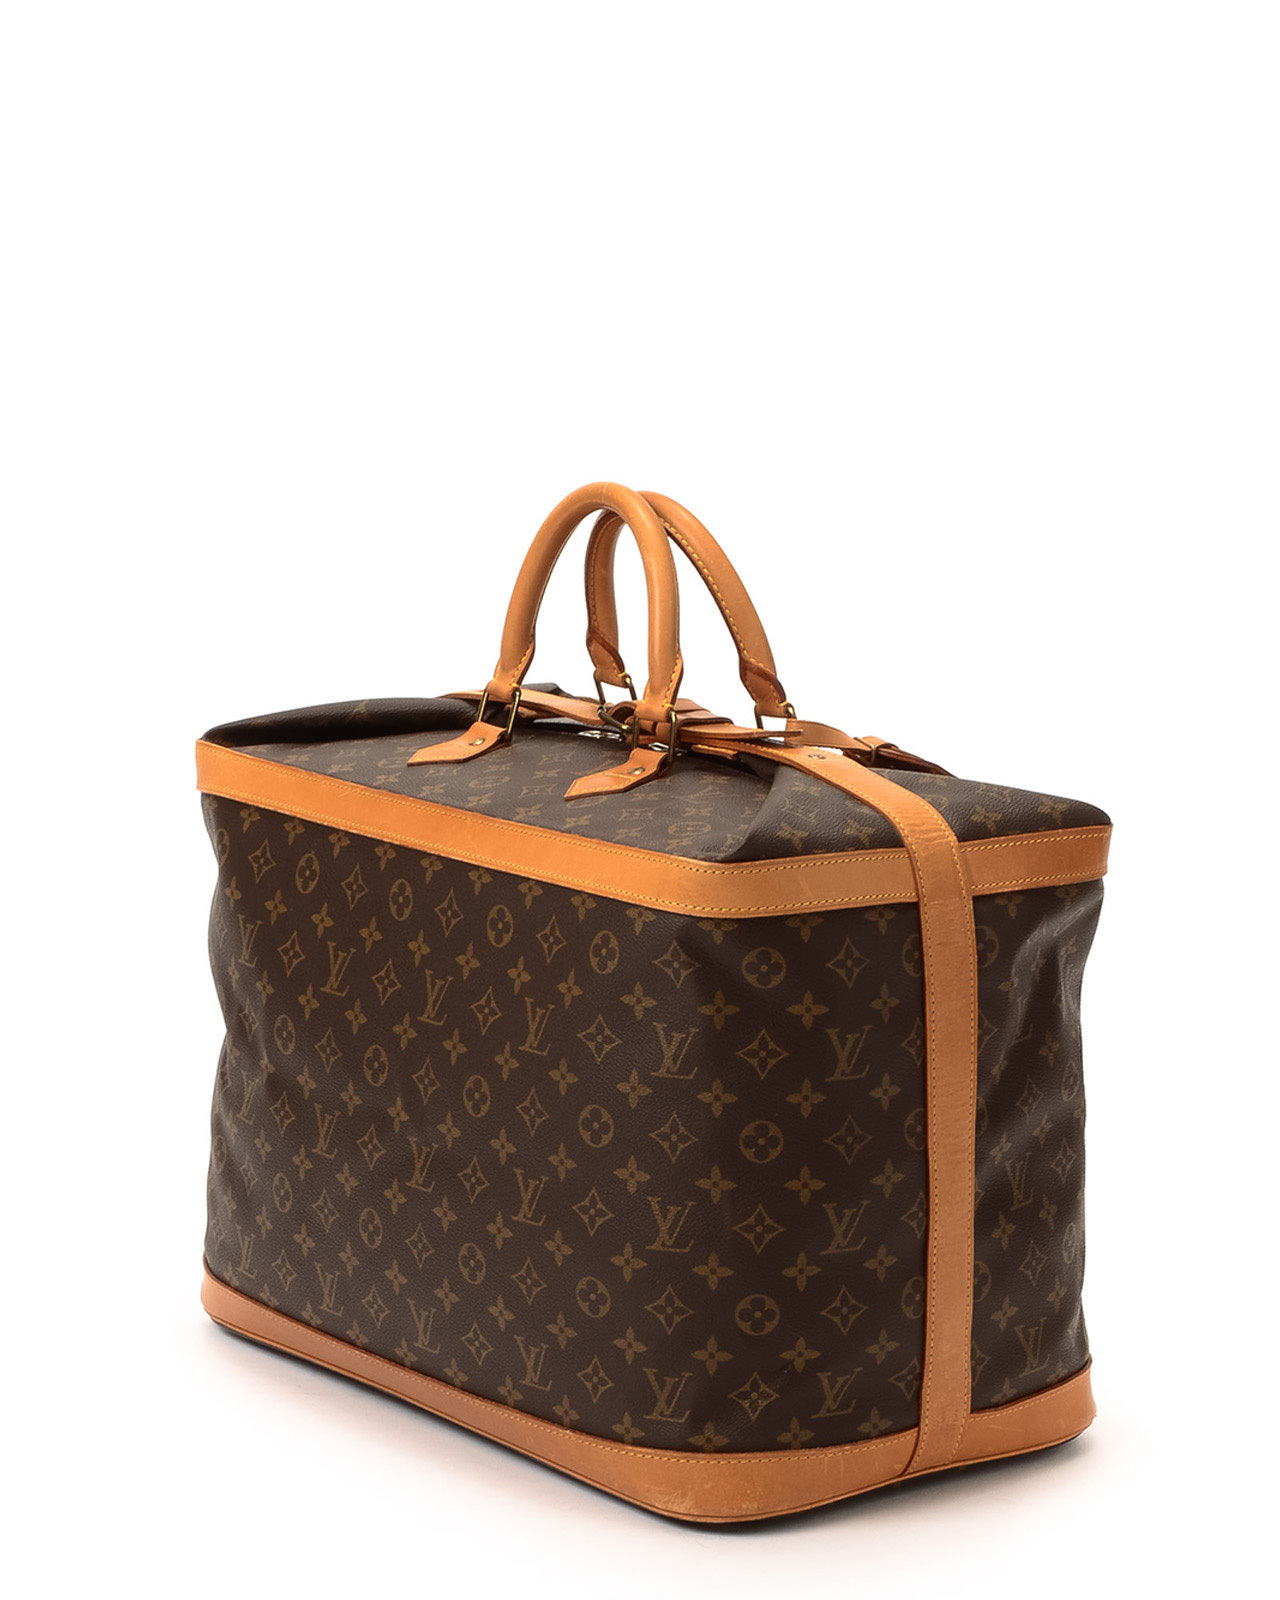 Lyst - Louis Vuitton Monogram Cruiser Bag 45 Travel Bag in Brown